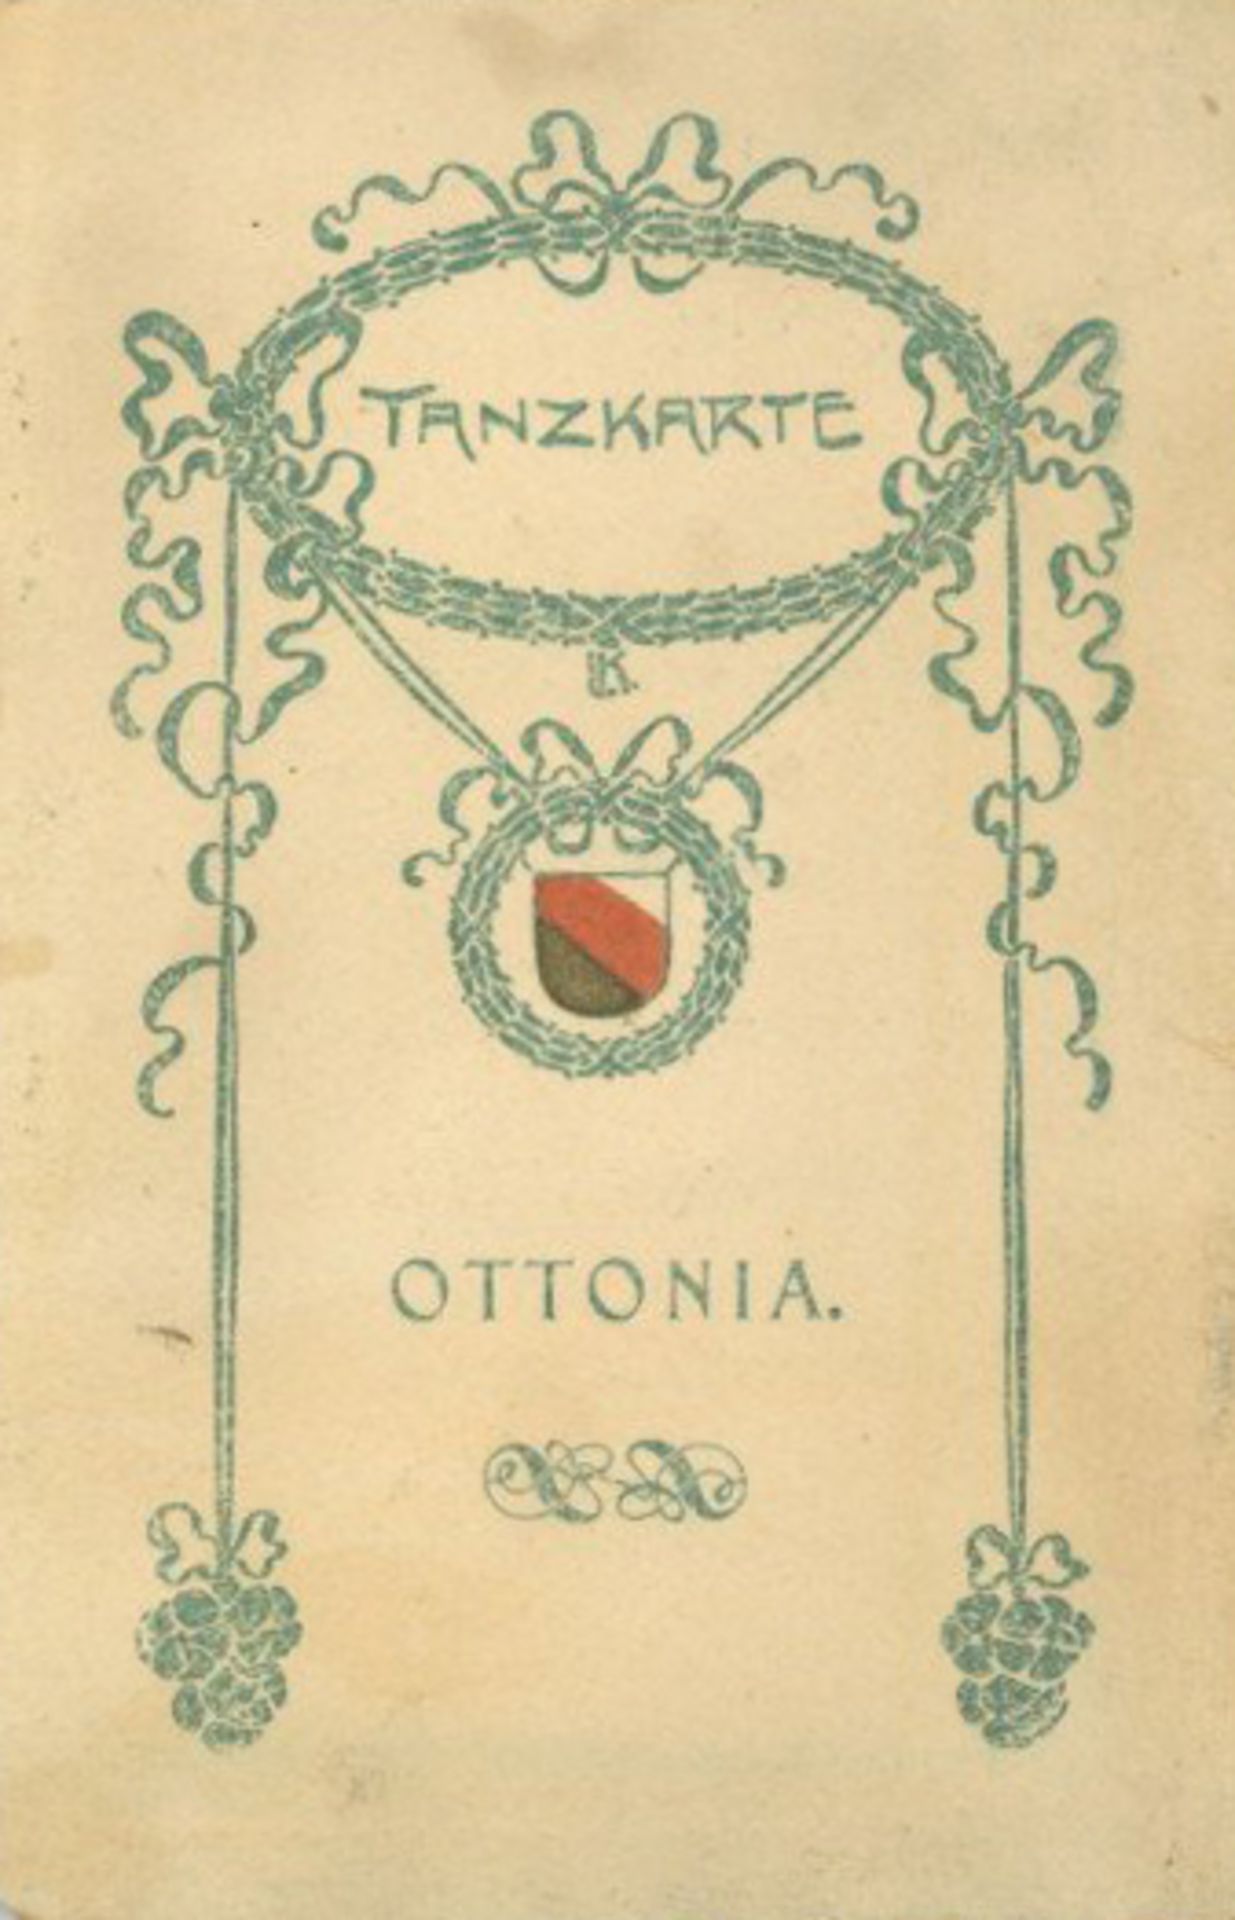 Studentika München (8000) Ottonia Tanzkarte II (fleckig)